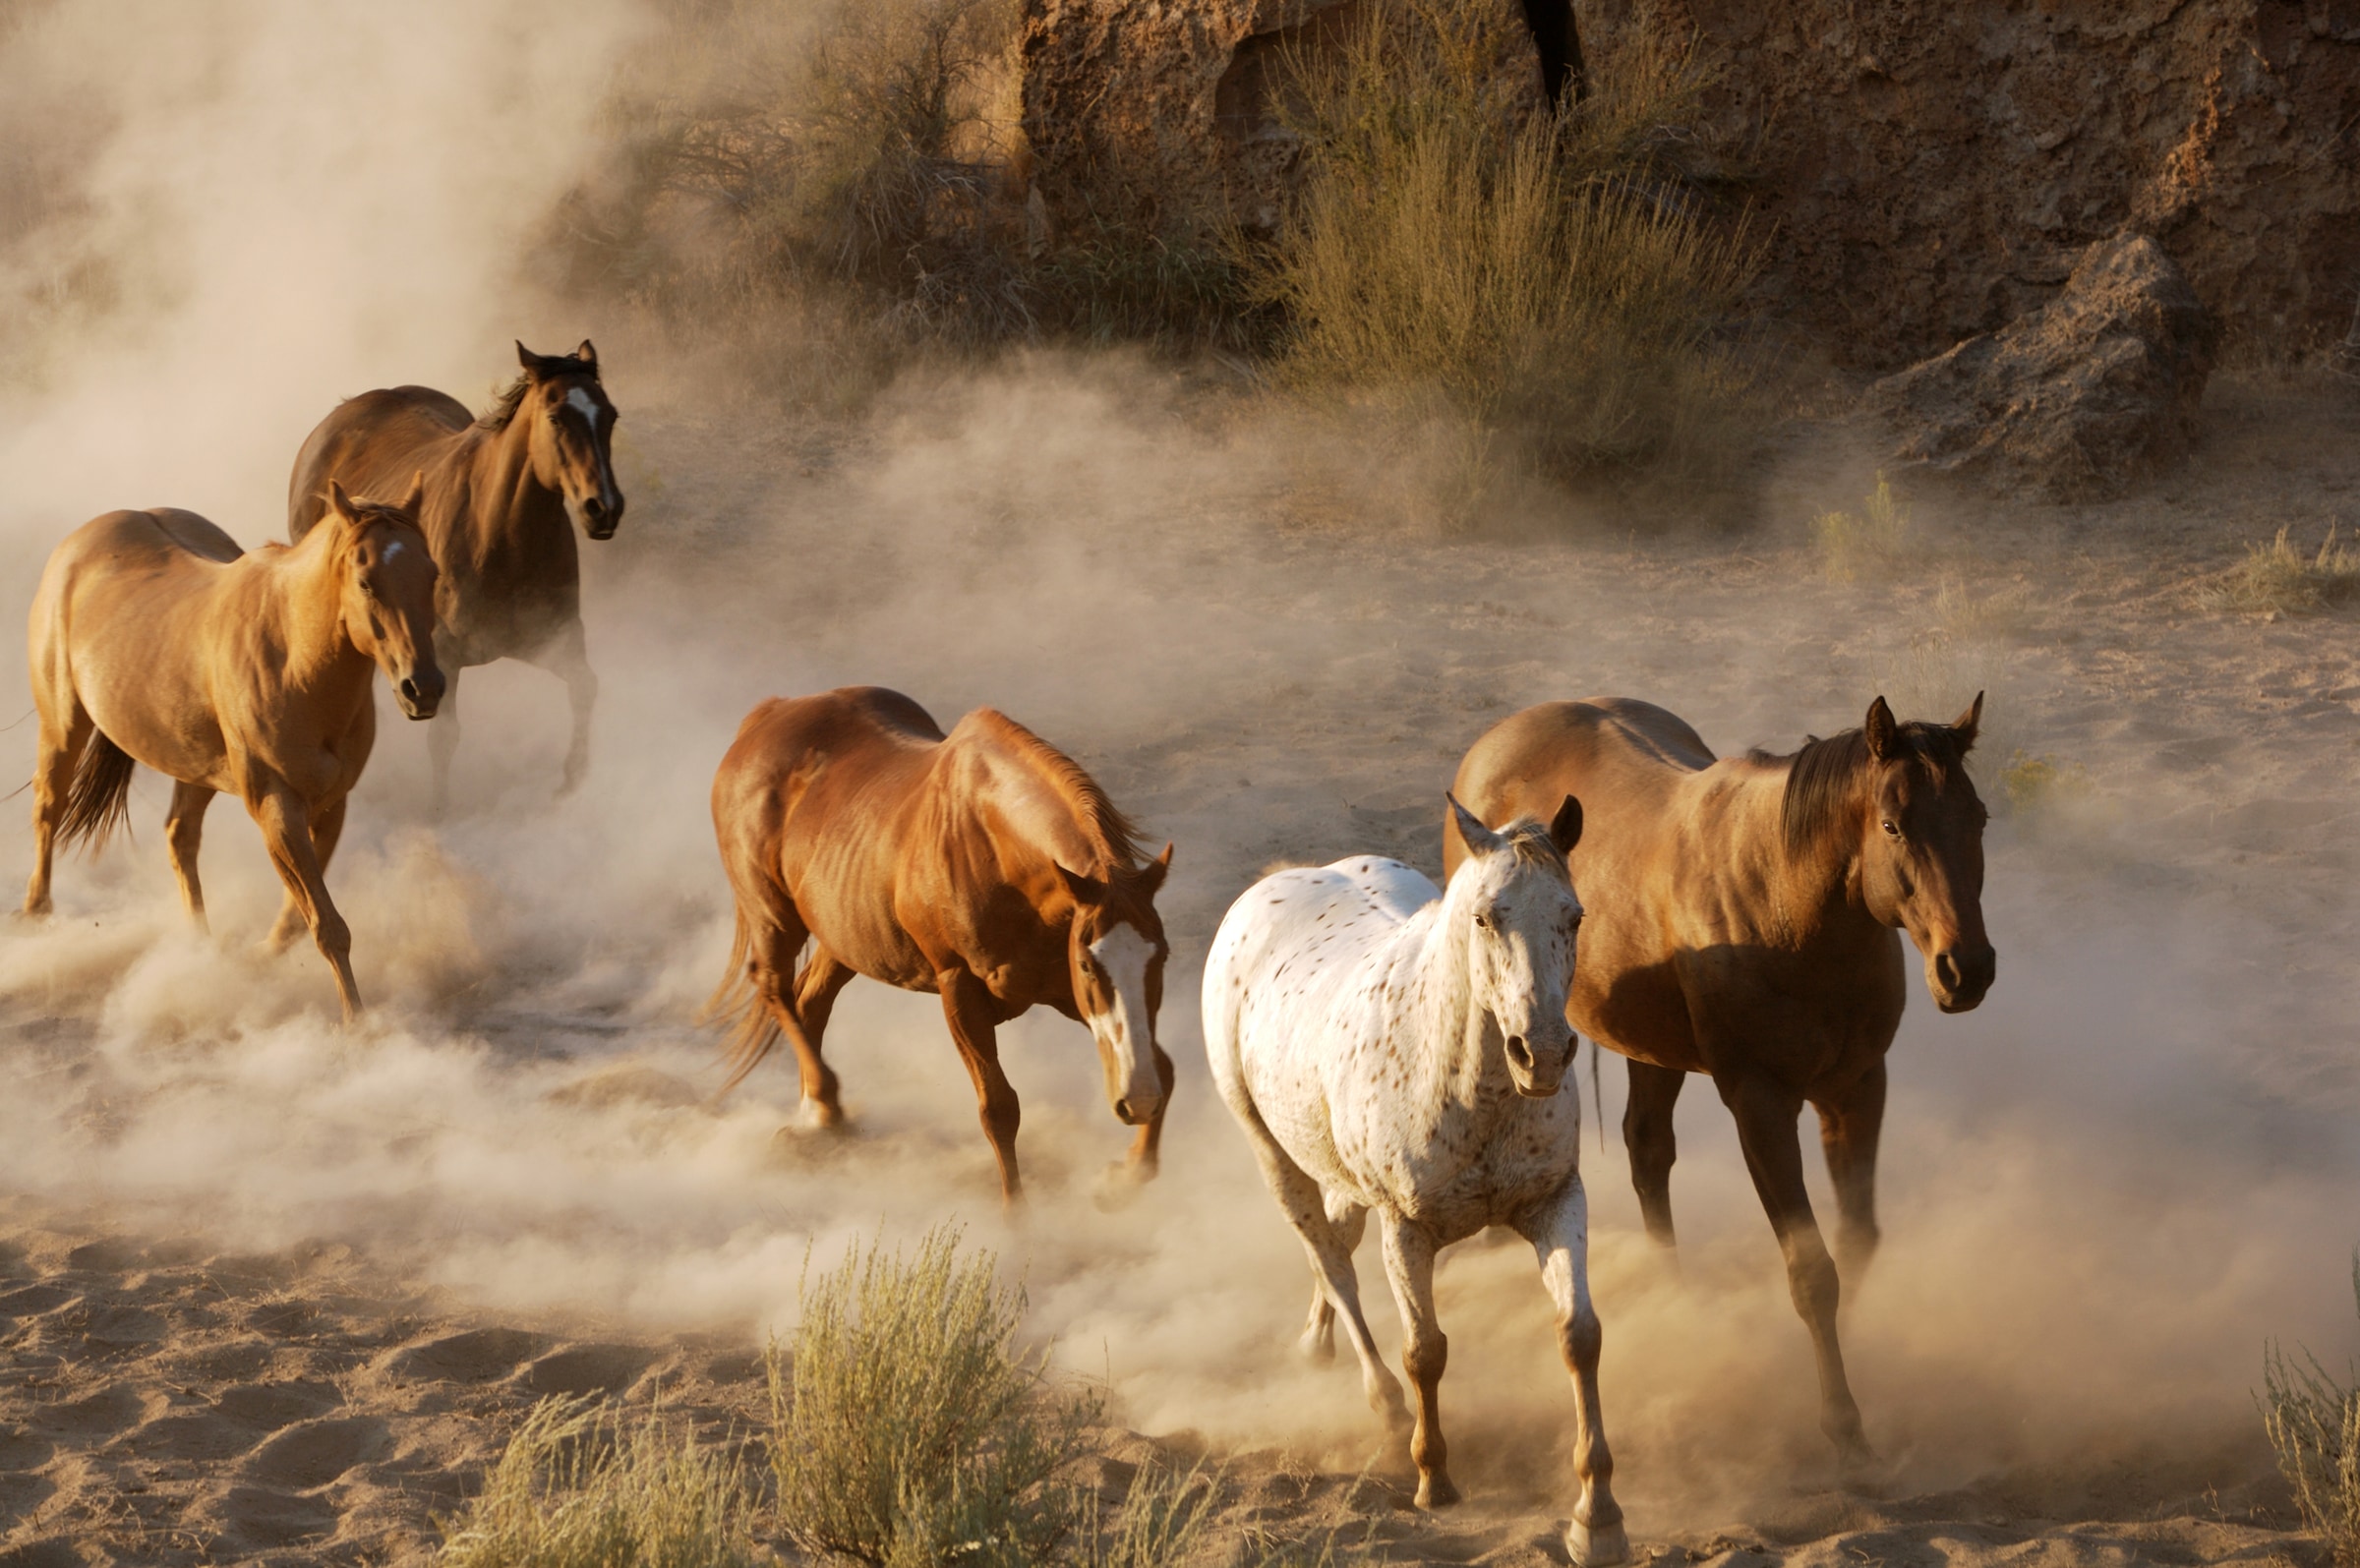 Papermoon Fototapetas »Wild Horses«